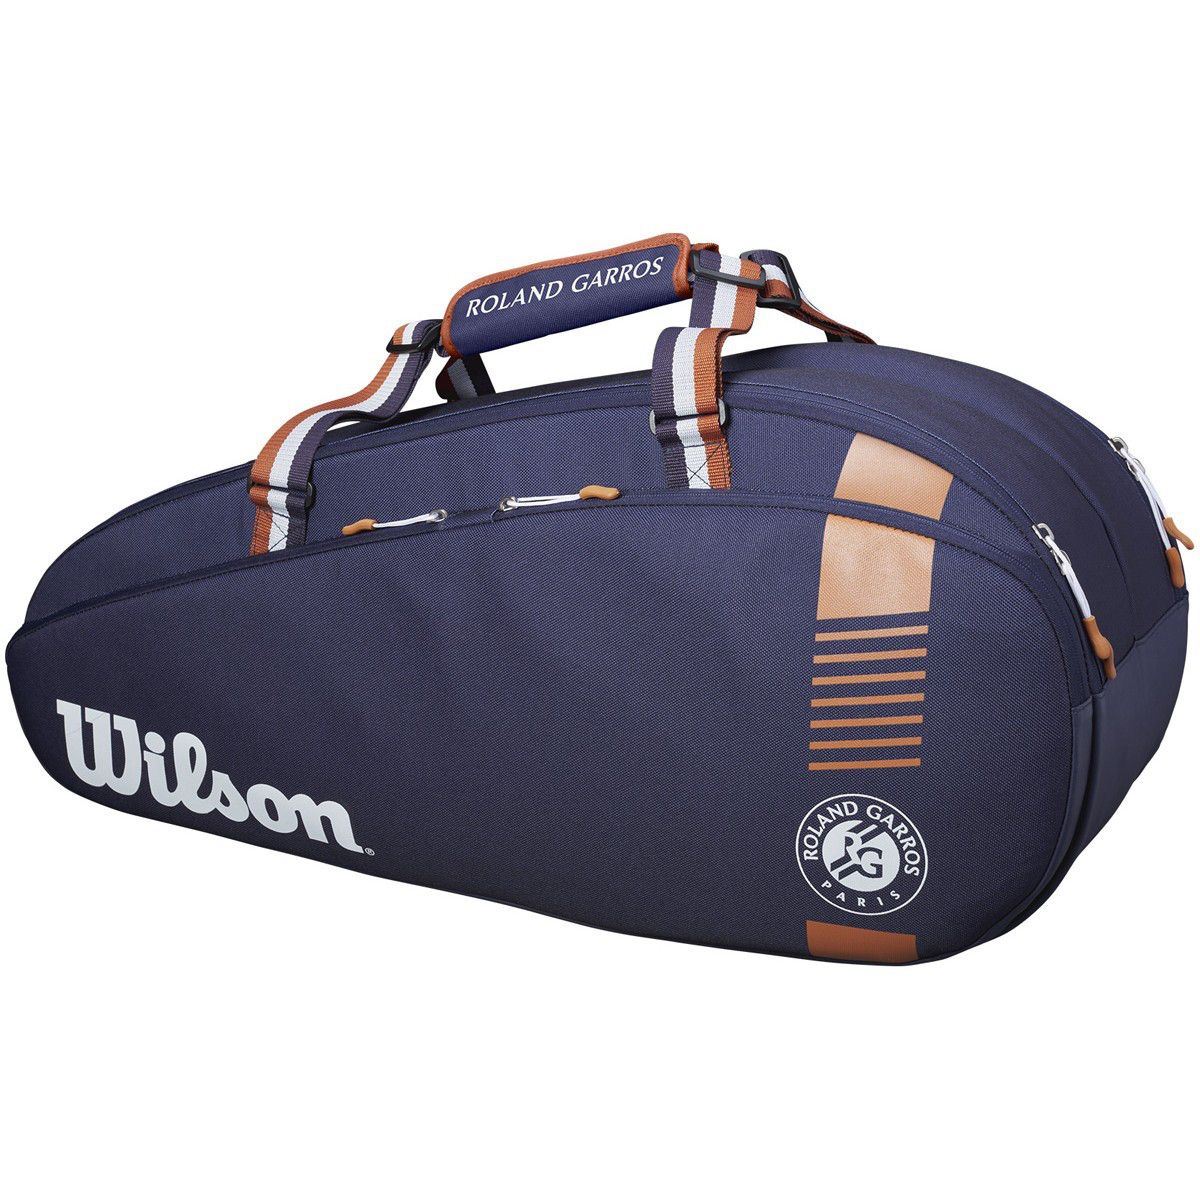 Wilson Roland Garros Team 6-Pack Wilson Tennis Bags WR800670